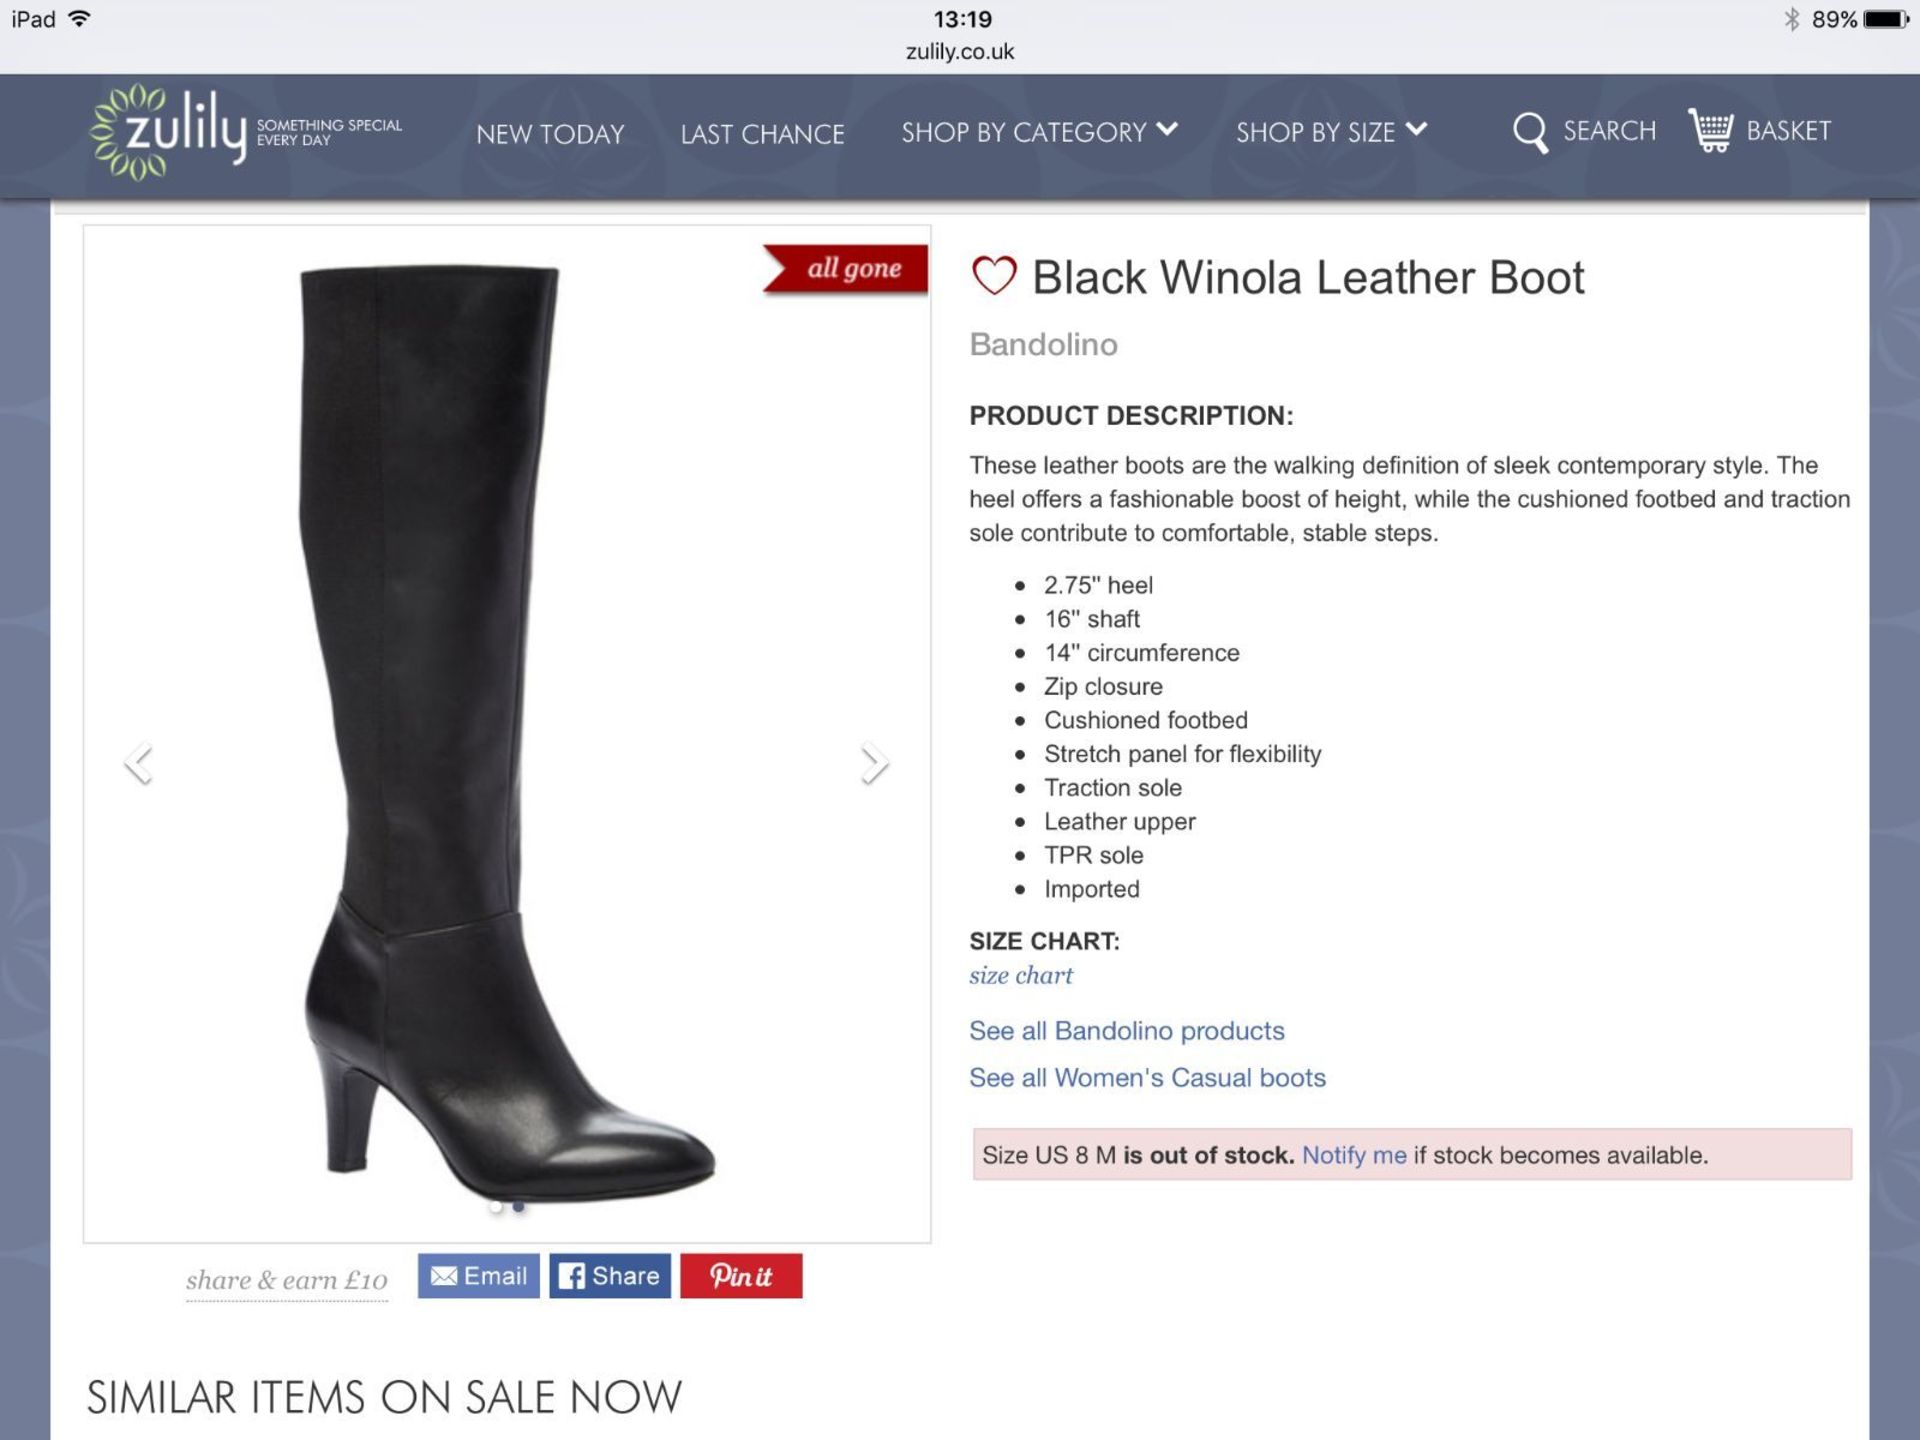 Bandolino Black Winona Leather Boot, Size Eur 39.5 (New with box) [Ref: J-003] - Image 3 of 4